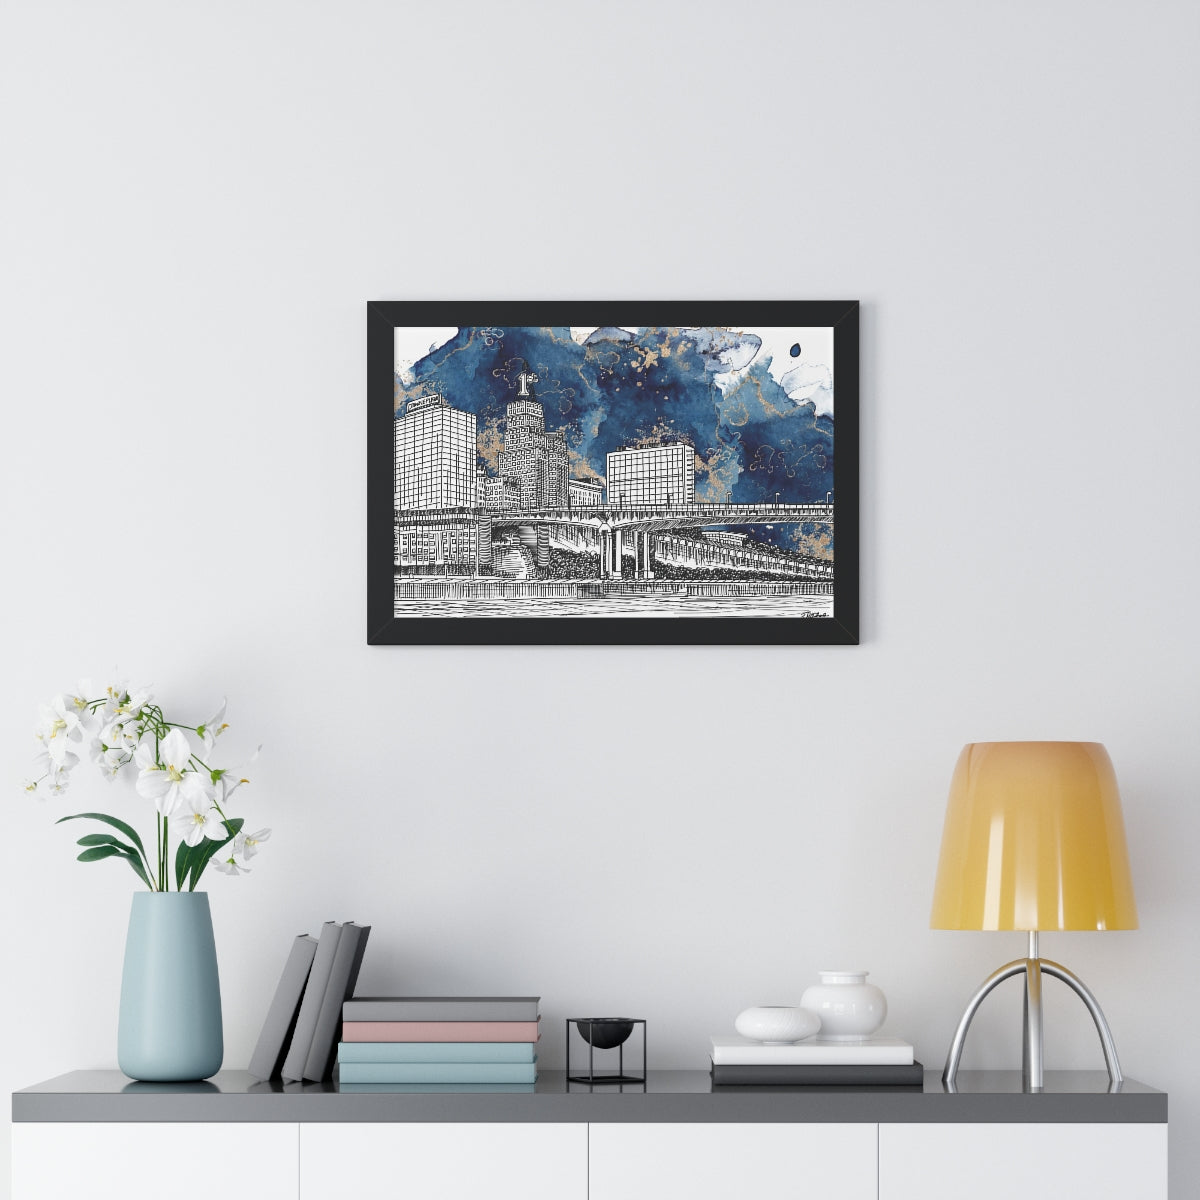 Saint Bridge - Galleria Style [Framed]